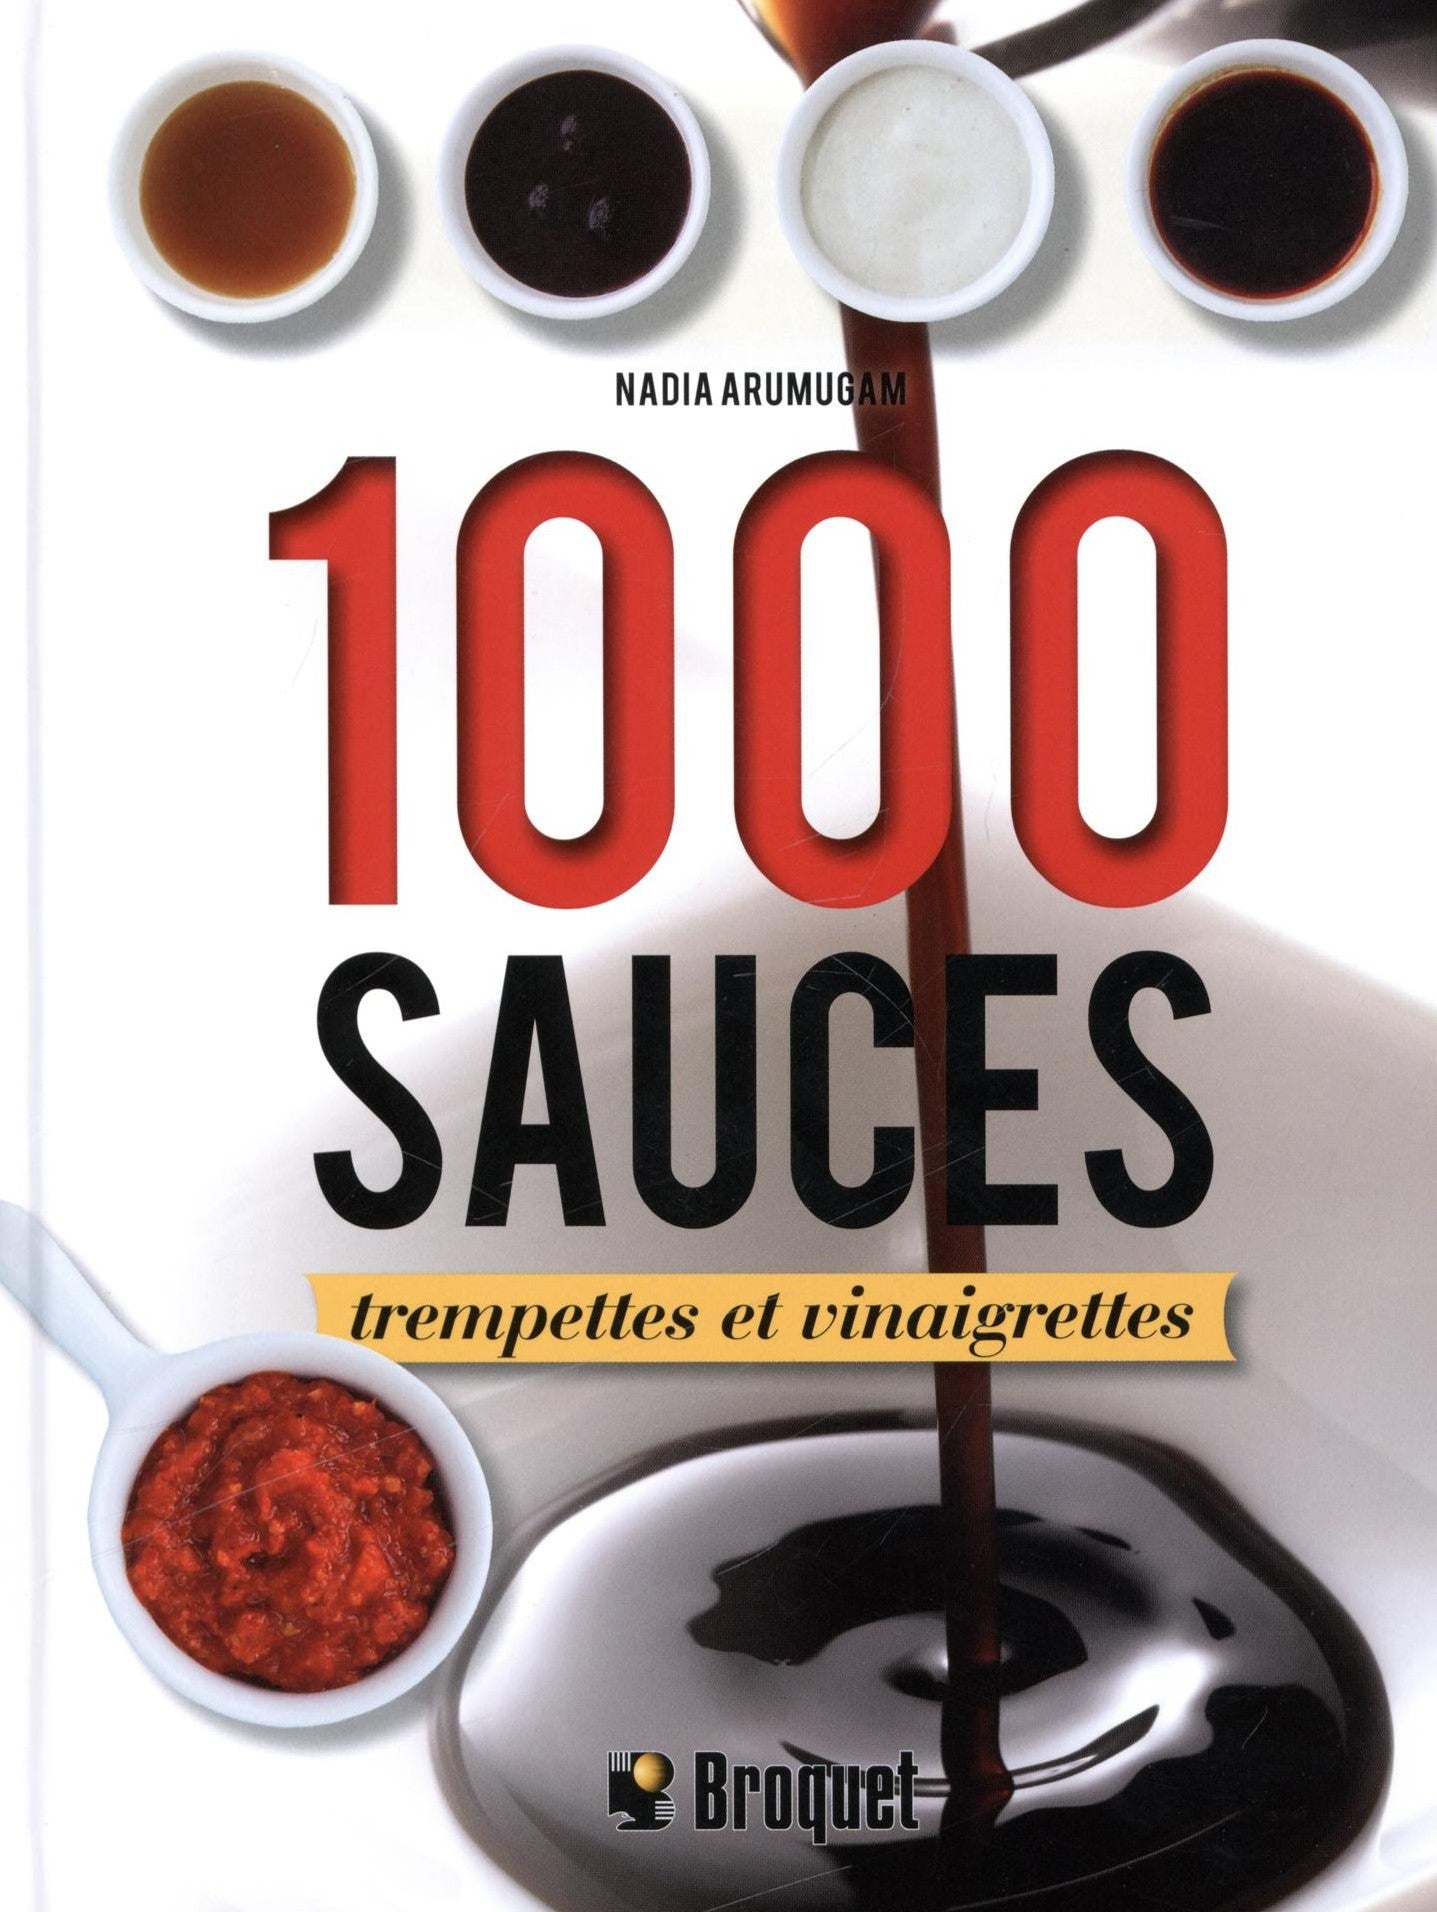 1000 Sauces, trempettes et vinaigrettes - Nadia Arumugam